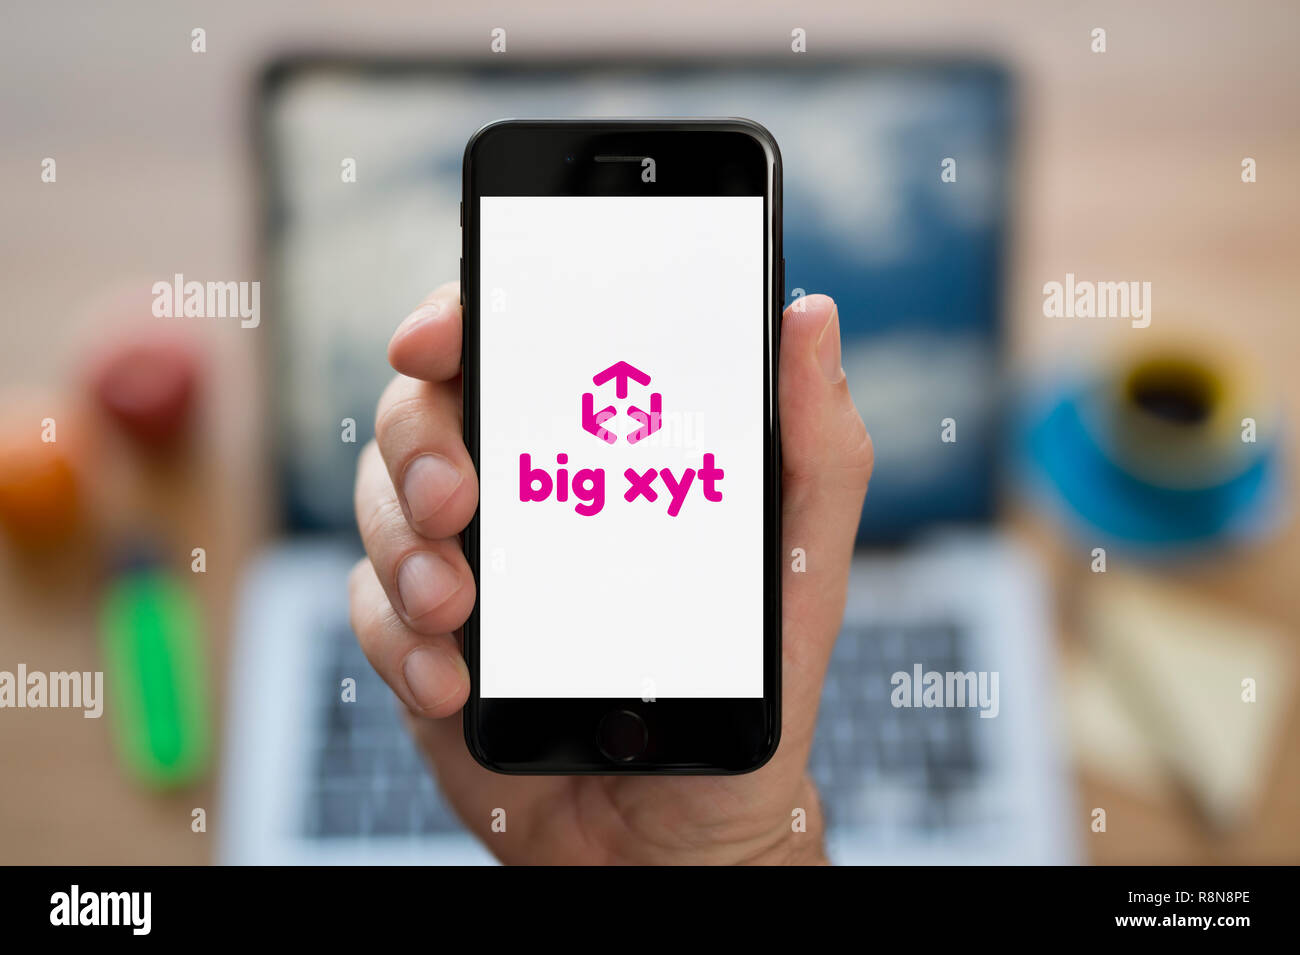 Un hombre mira el iPhone que muestra el logotipo de big xyt (uso Editorial solamente). Foto de stock